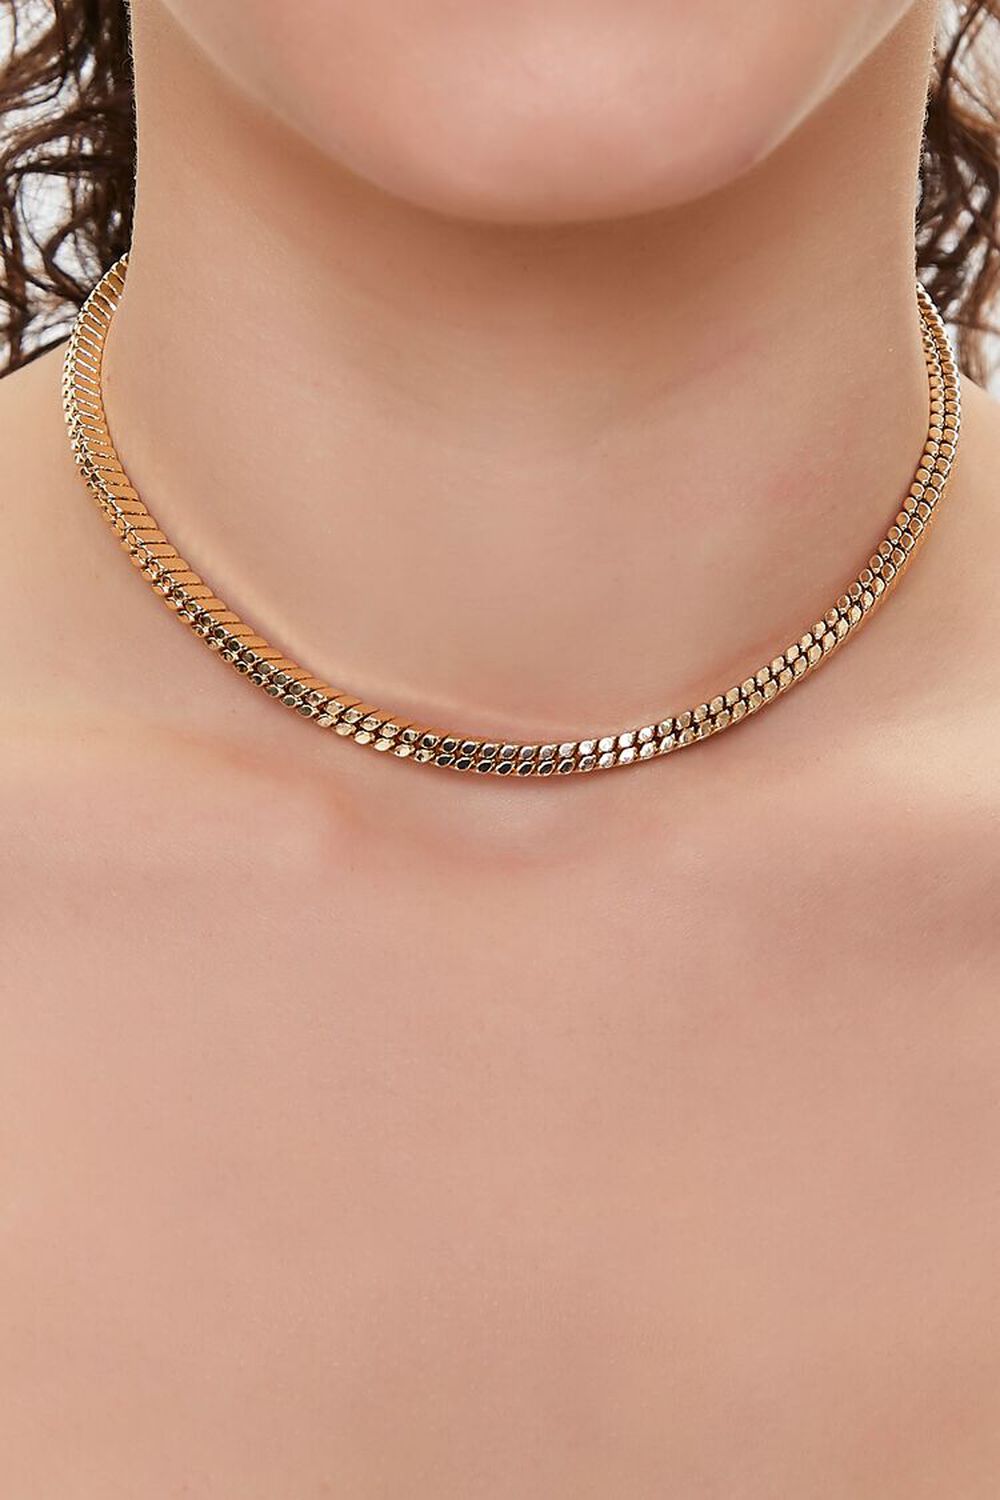 GOLD Herringbone Chain Necklace, image 1